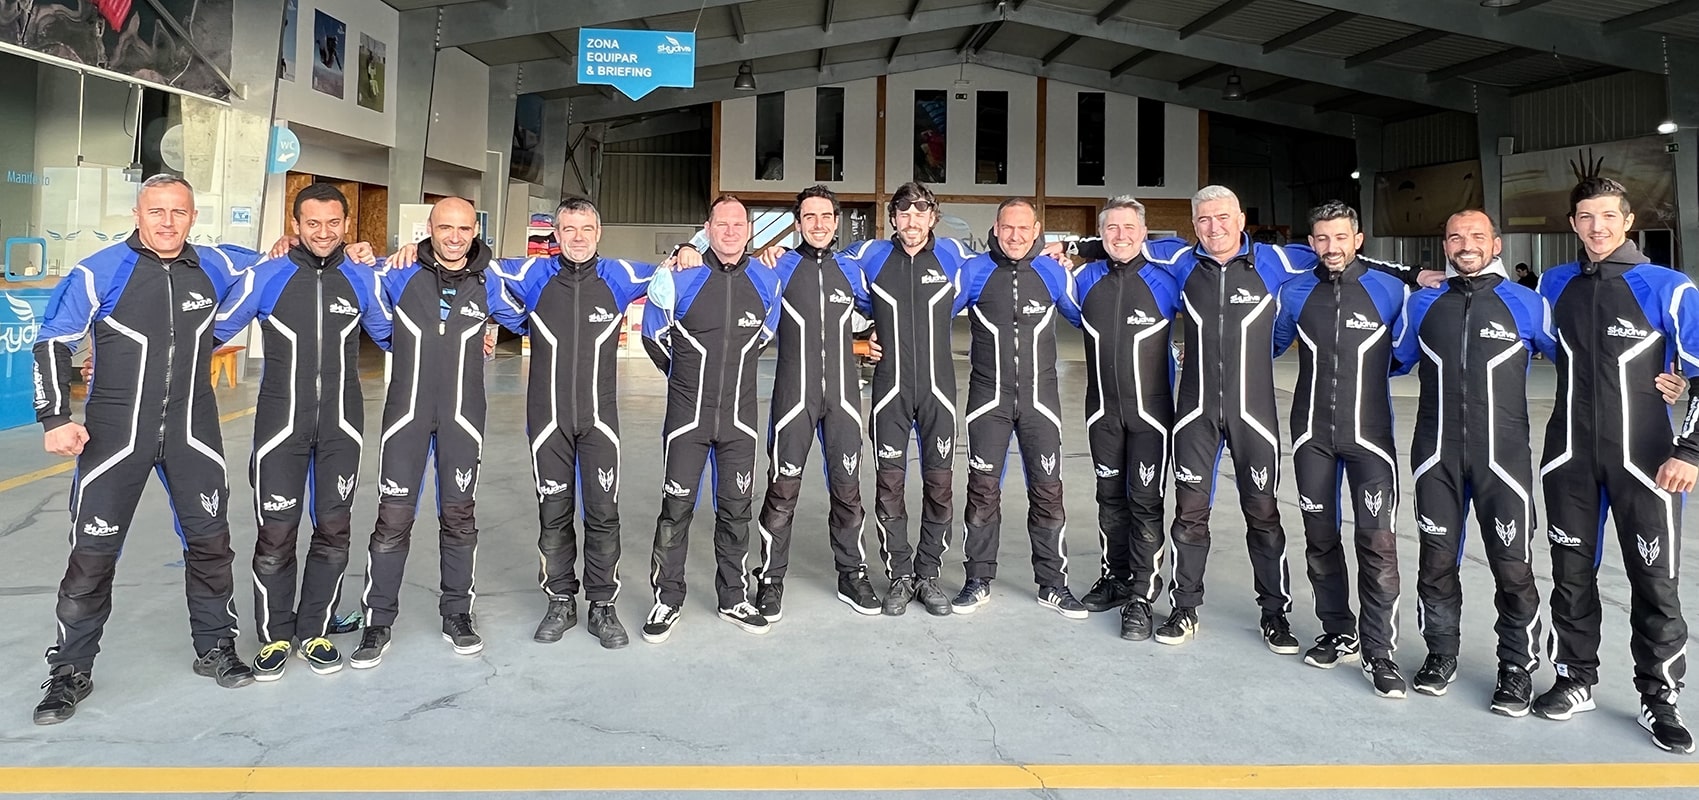 Staff Skydive Portugal